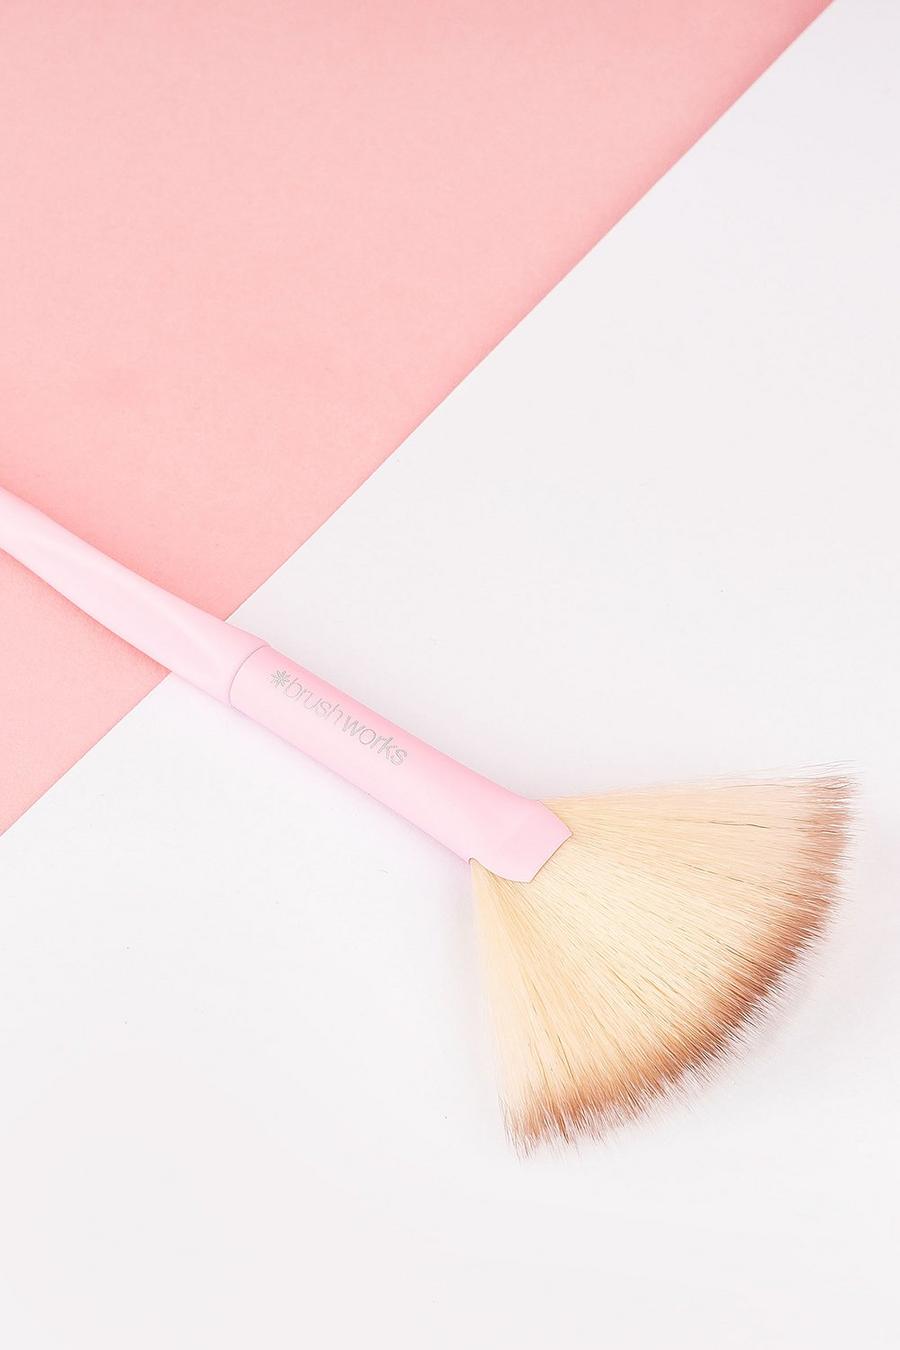 Baby pink Brushworks Hd Fan Brush